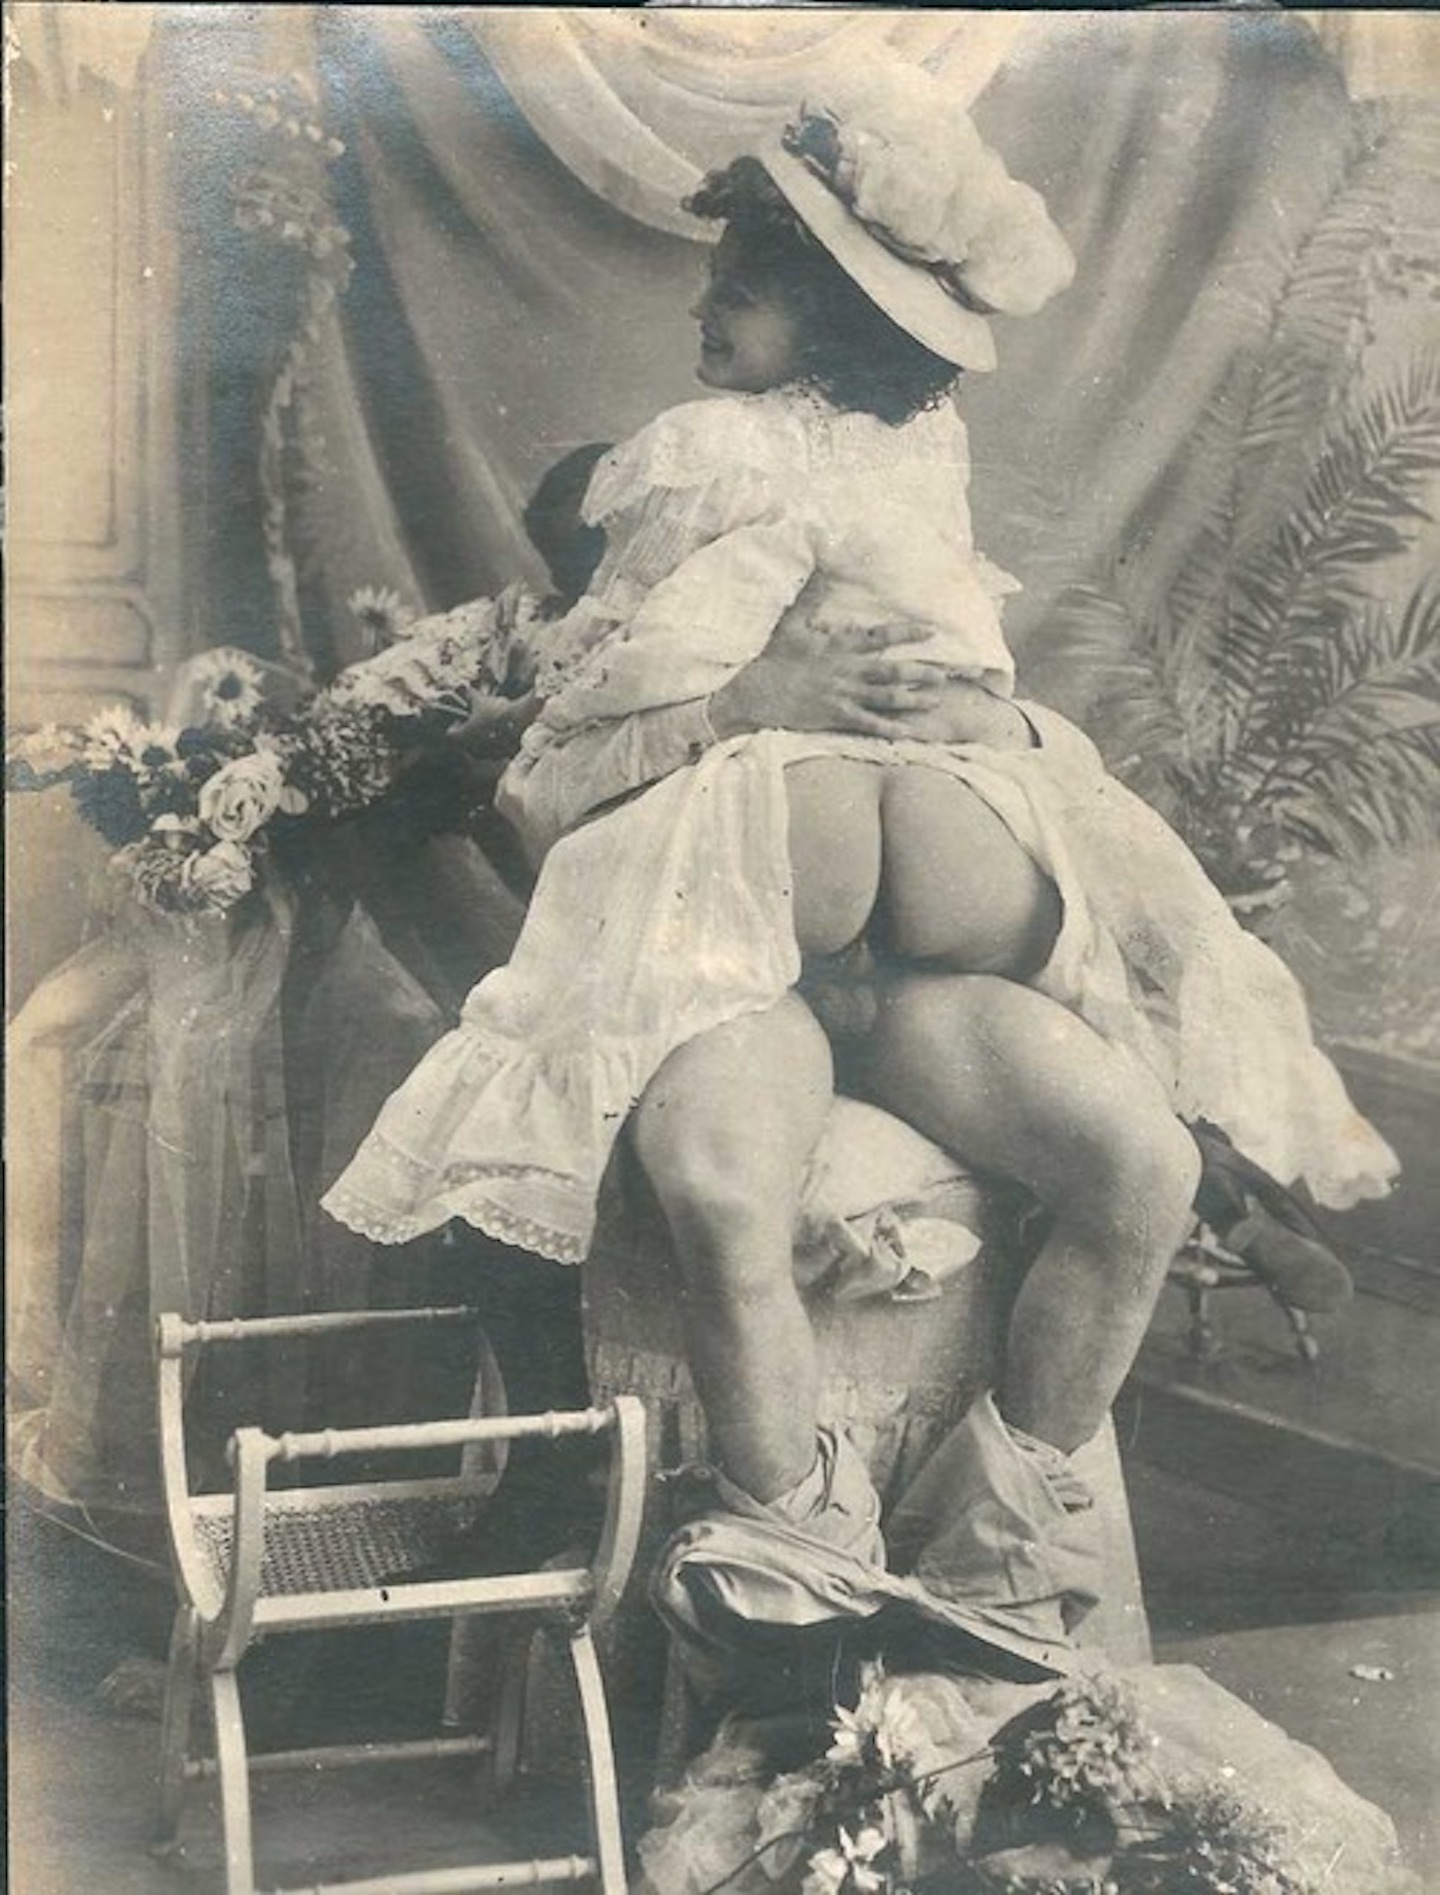 Antuqe 1800s - The Unbridled Joy of Victorian Porn - VICE